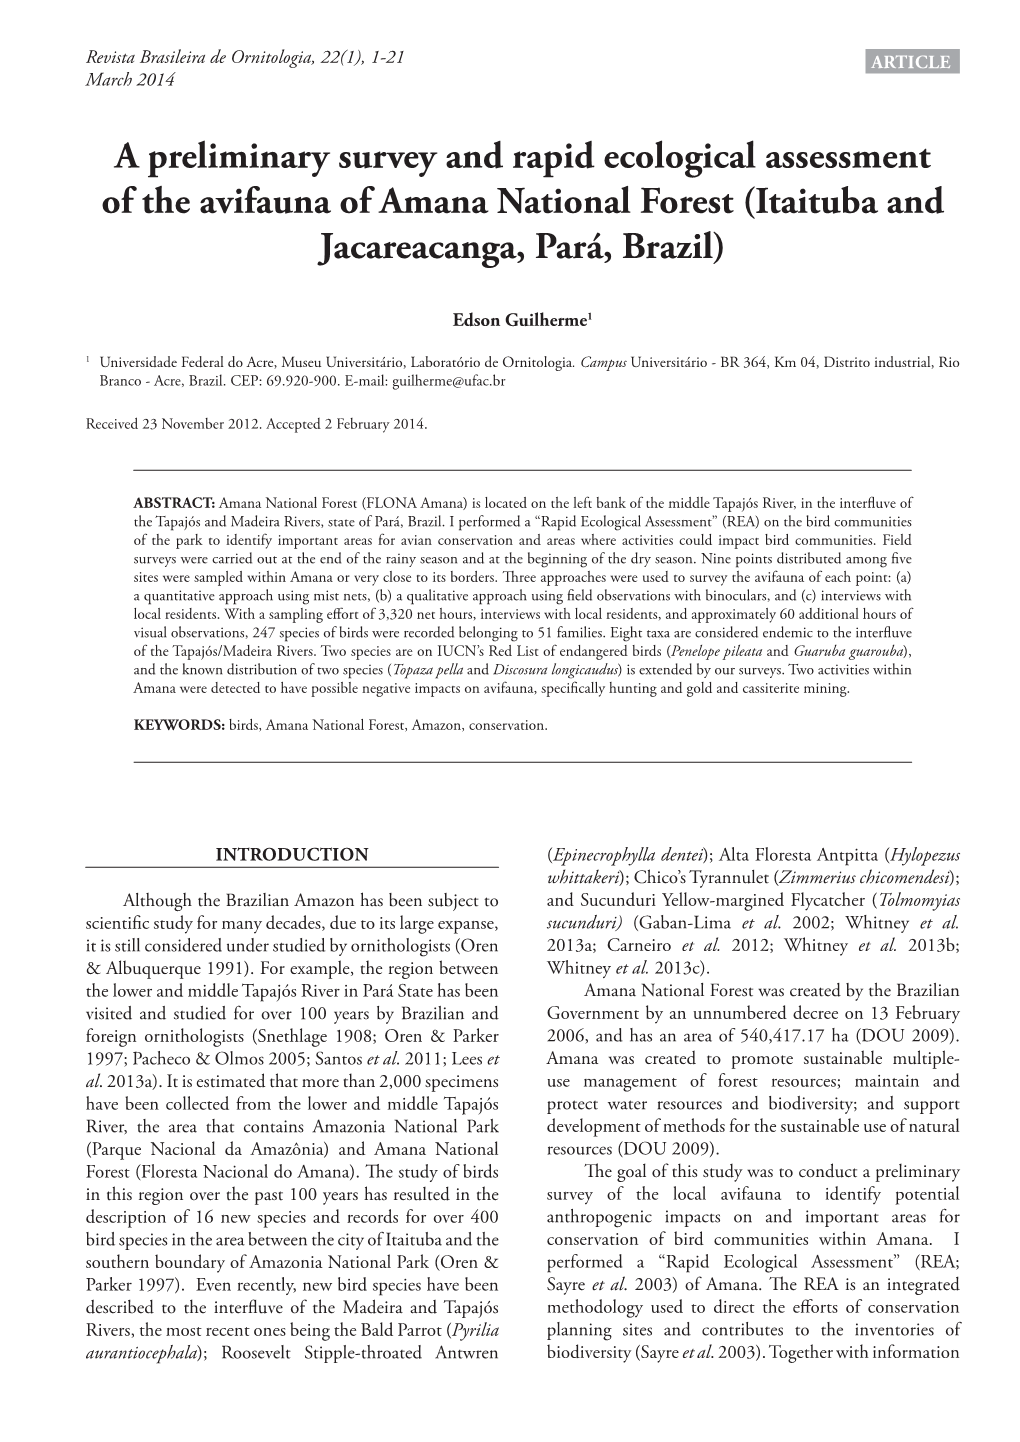 A Preliminary Survey and Rapid Ecological Assessment of the Avifauna of Amana National Forest (Itaituba and Jacareacanga, Pará, Brazil)